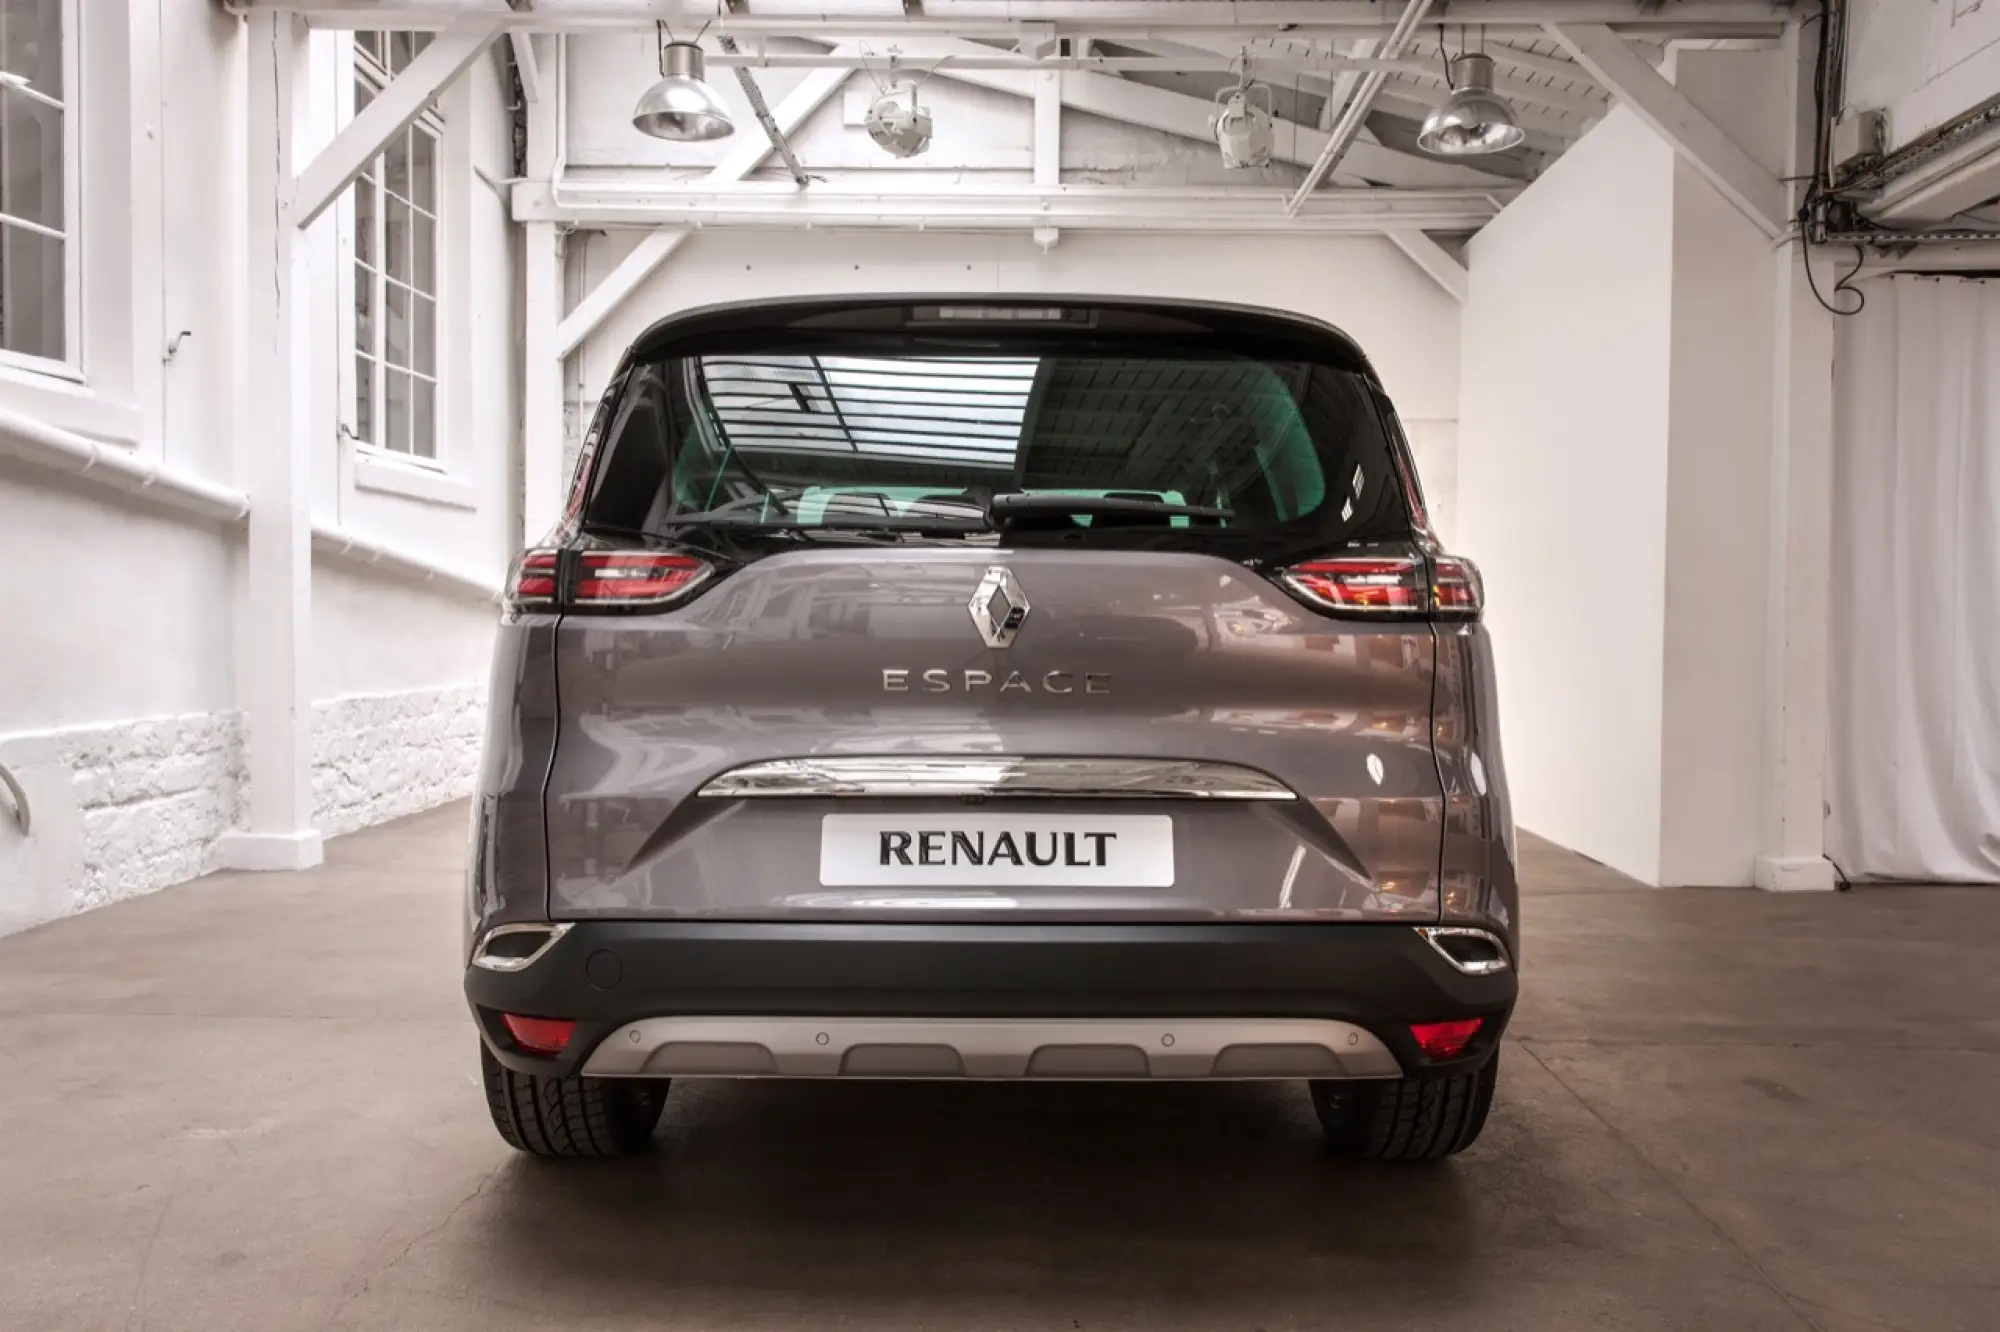 Renault Espace - presentazione stampa italiana - 5